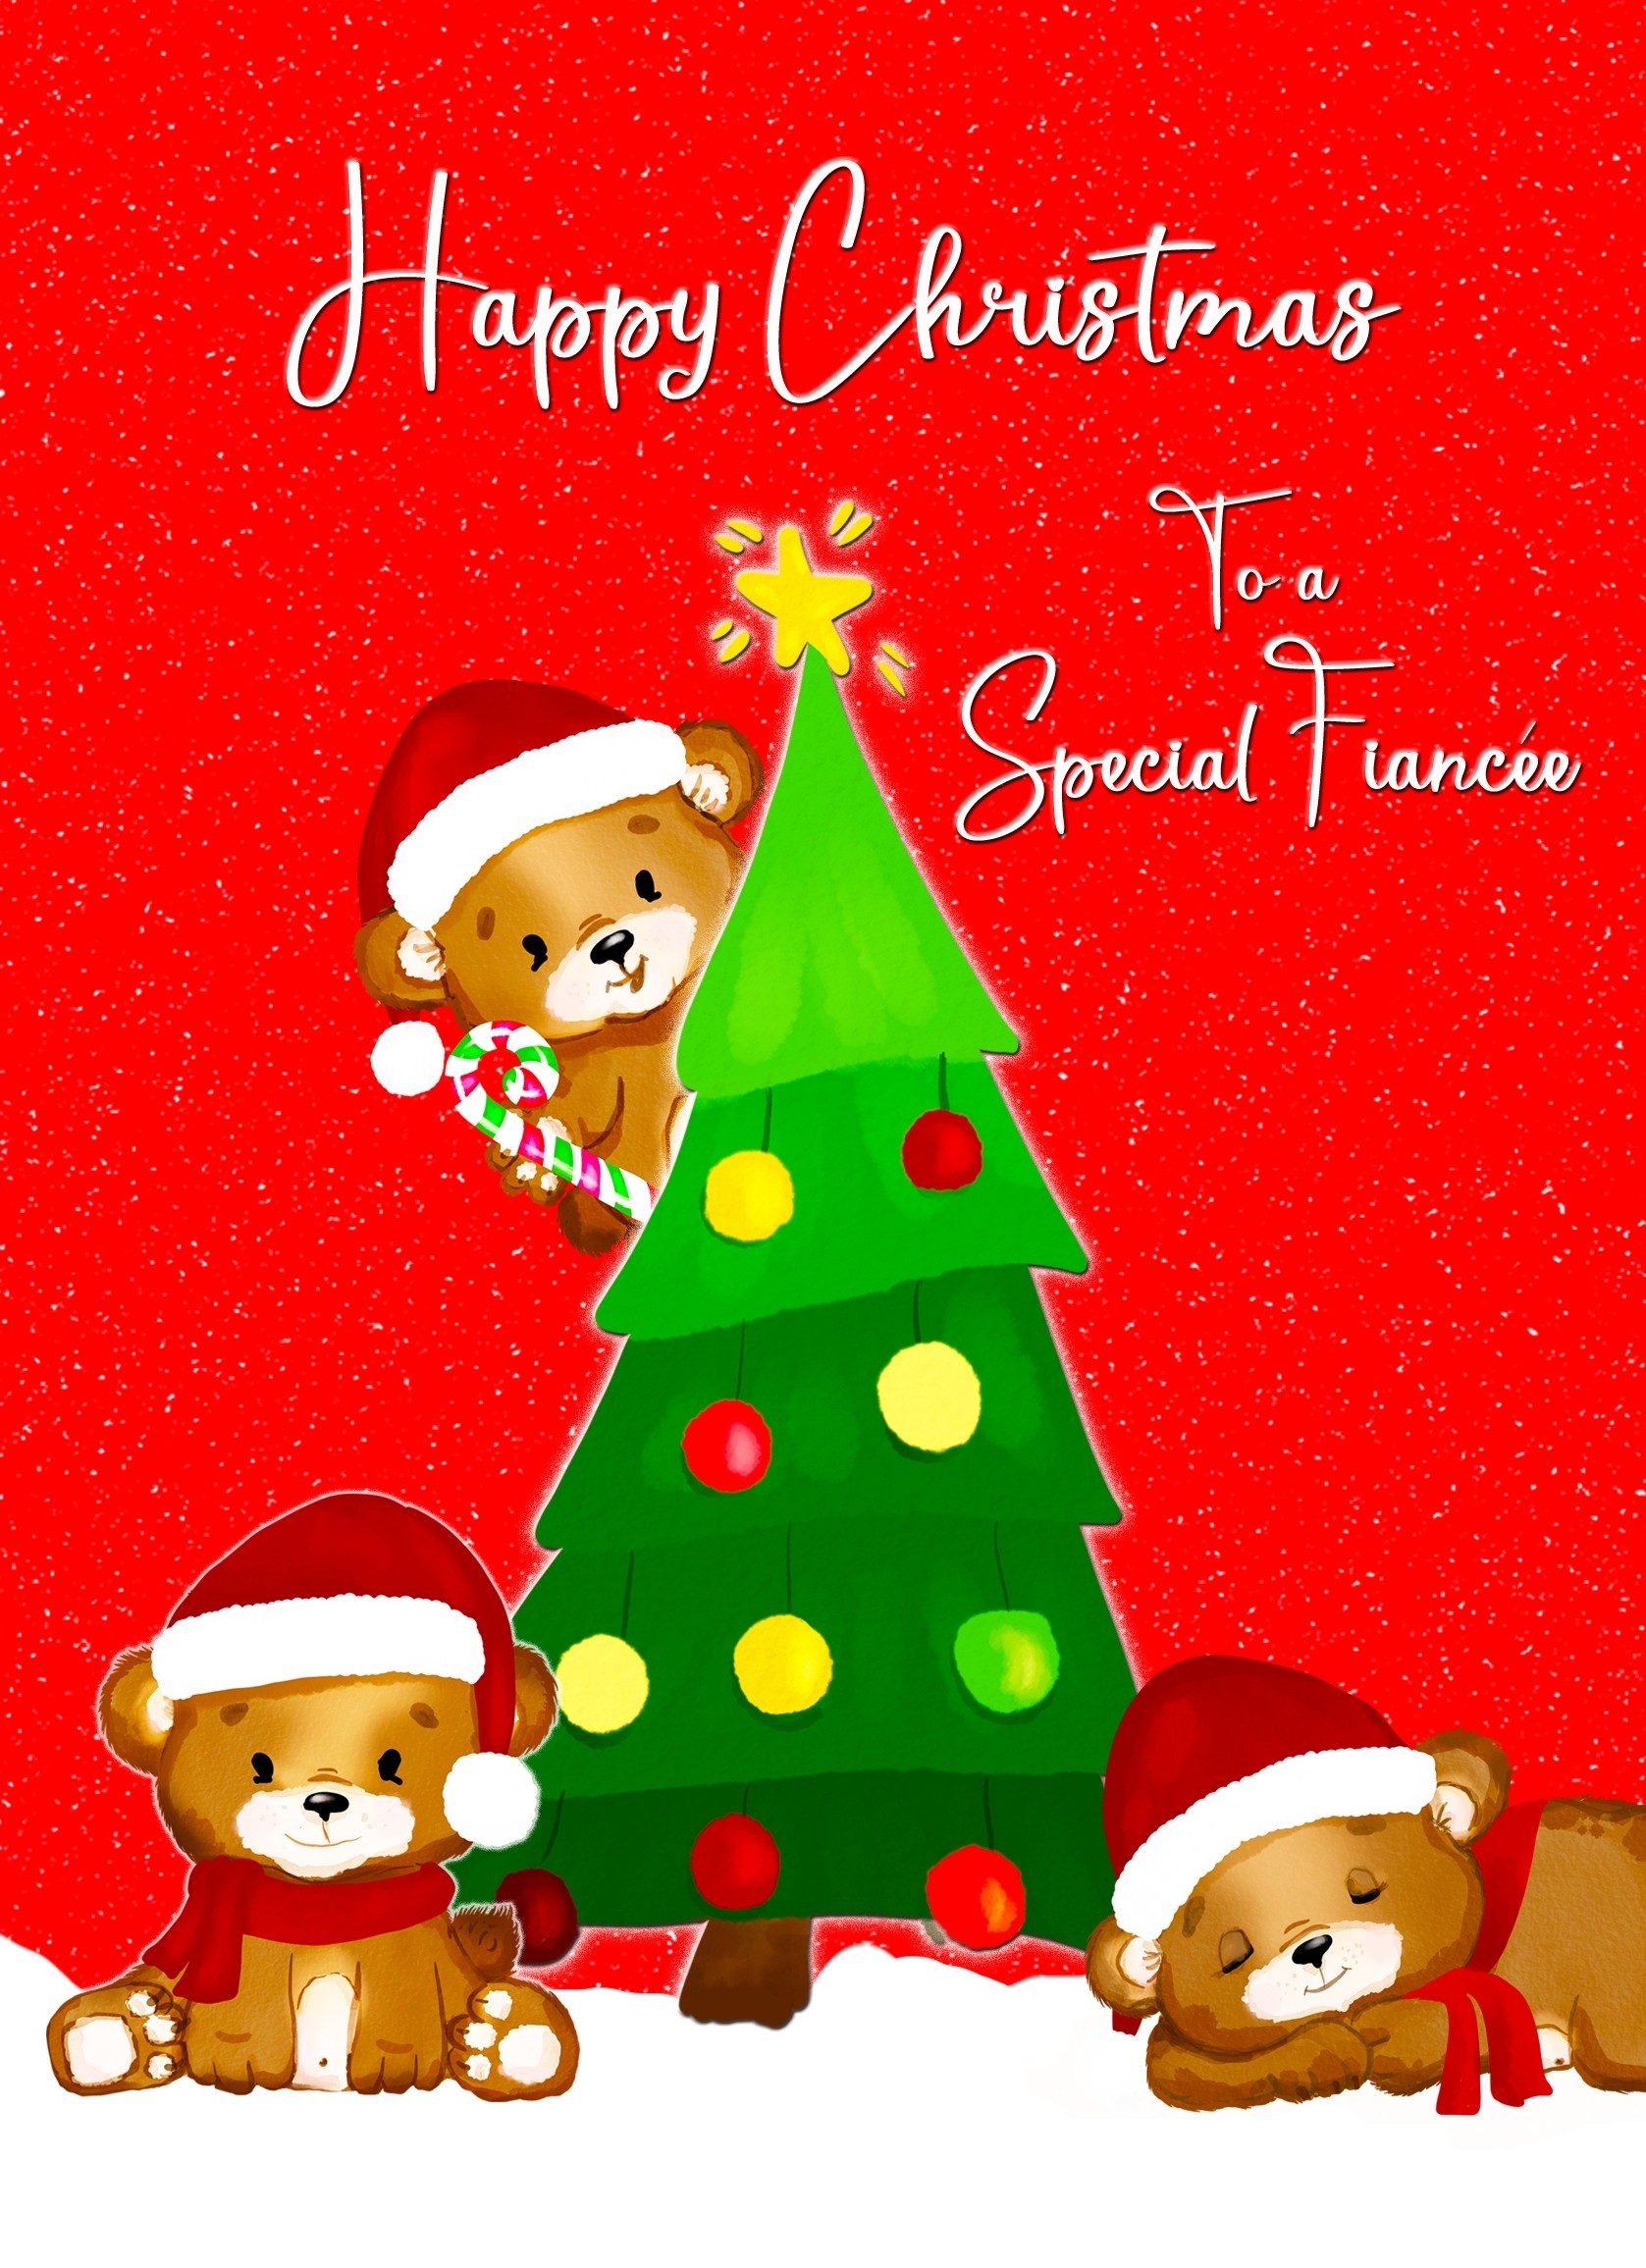 Christmas Card For Fiancee (Red Christmas Tree)